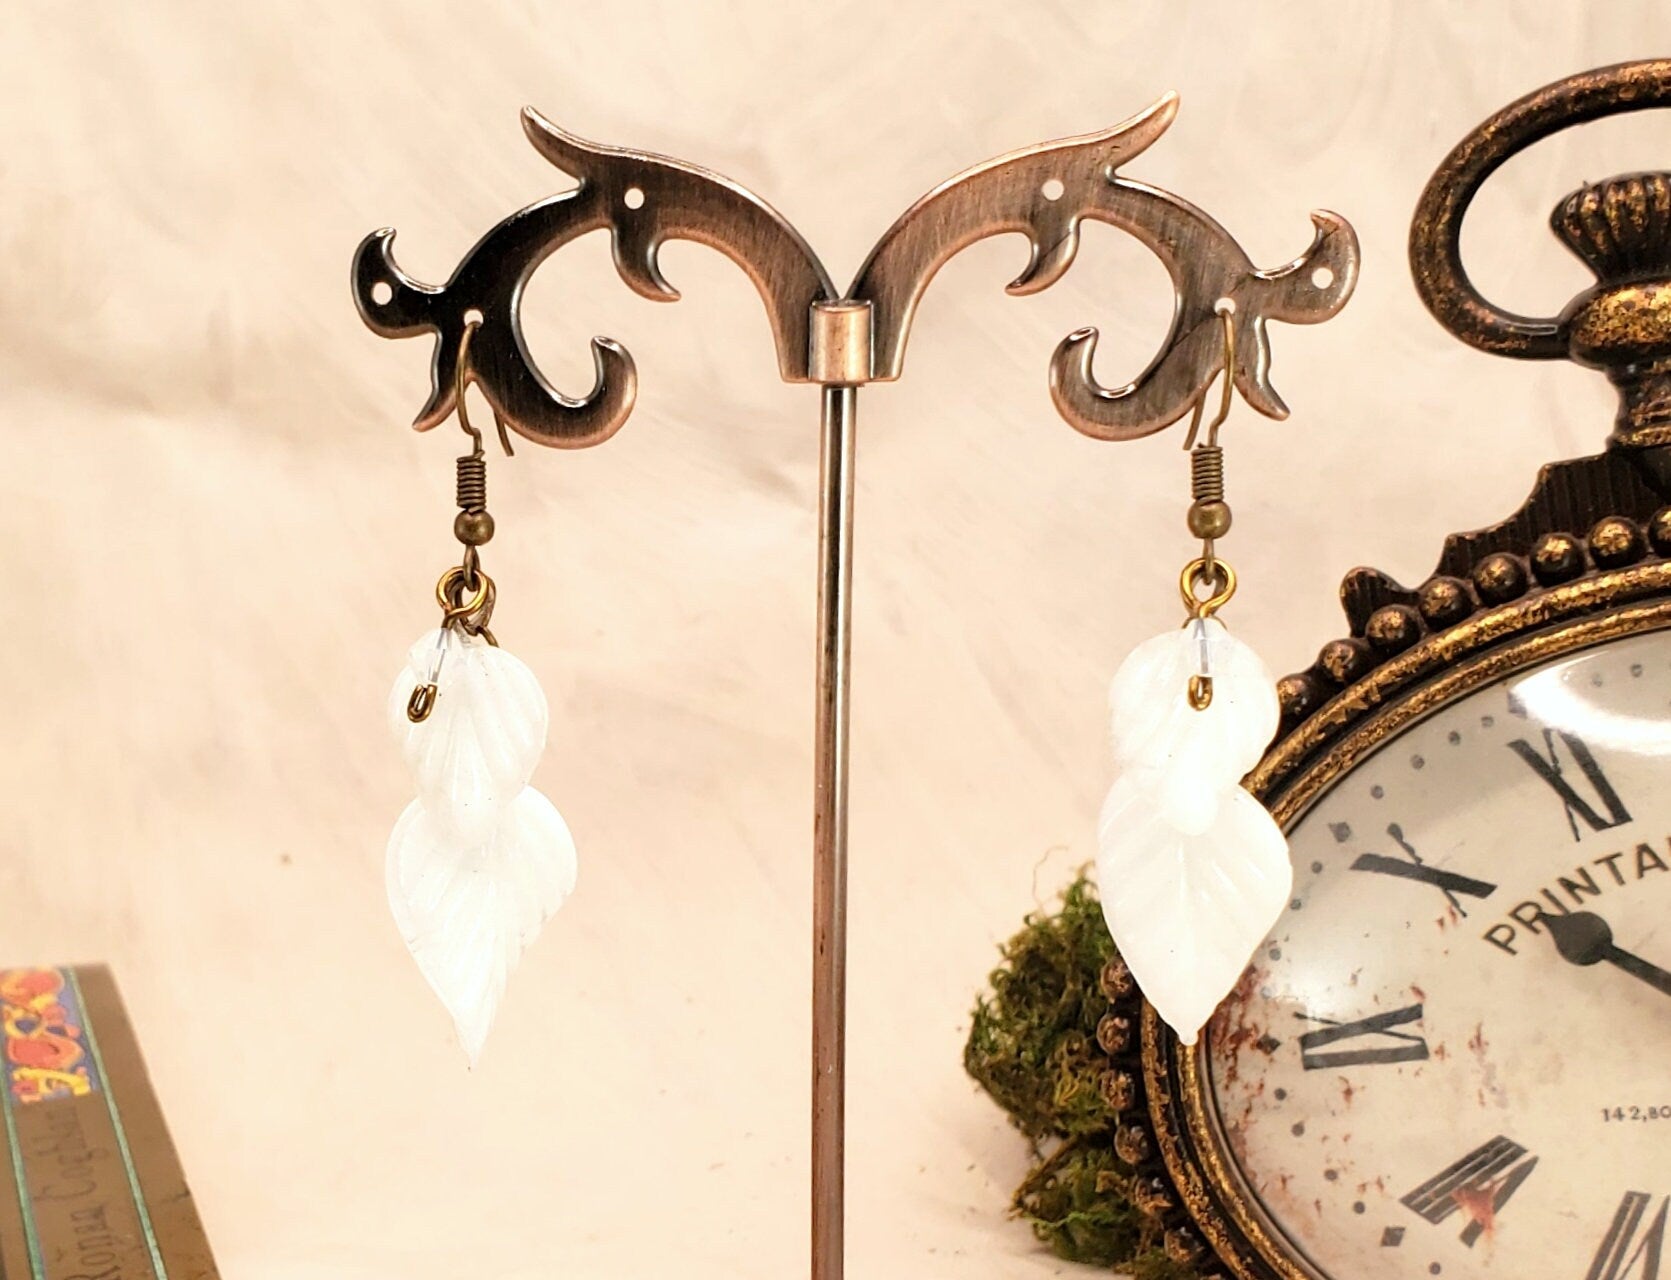 Double Glass Leaf Earrings in Black, Wedding, Bridesmaid, Art Nouveau, Renaissance, Belle Epoque, Forest, Choice of Closure Types